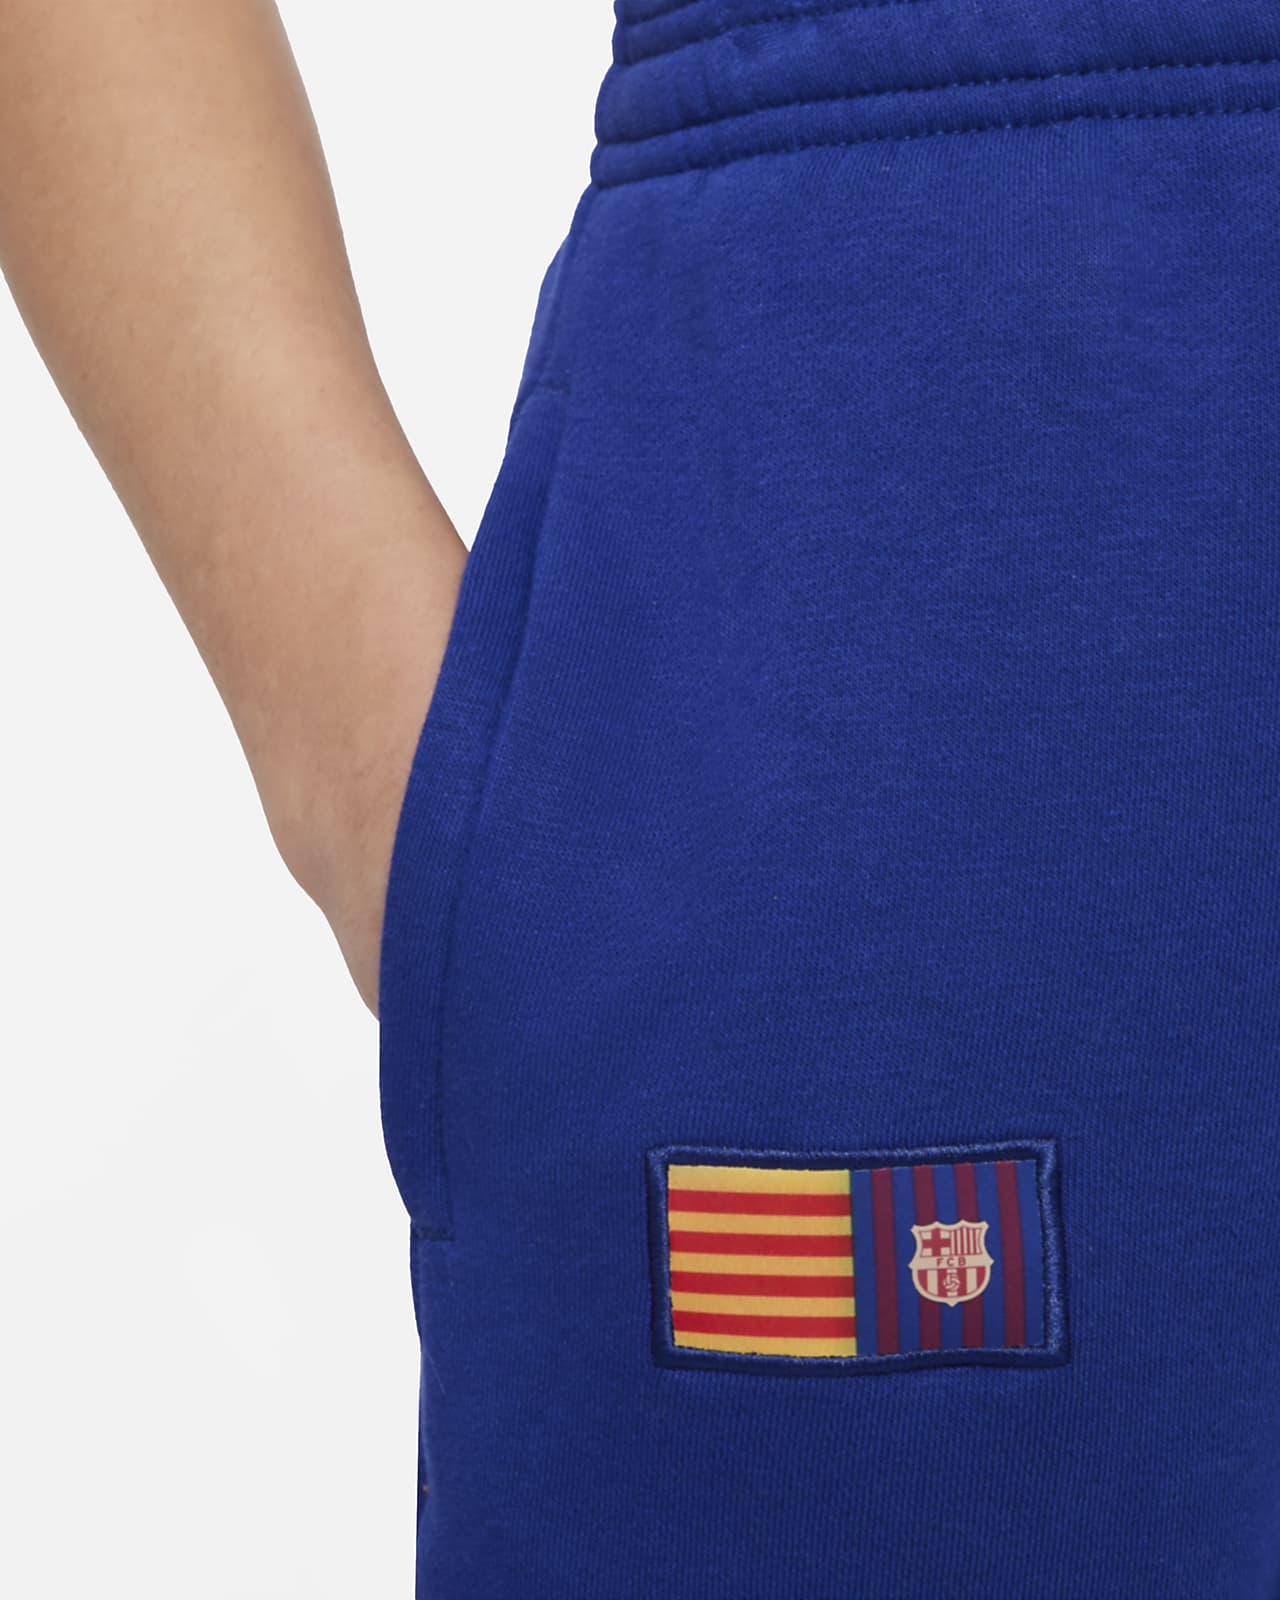 2016-17 Barcelona Nike Training Pants/Bottoms XL.Kids